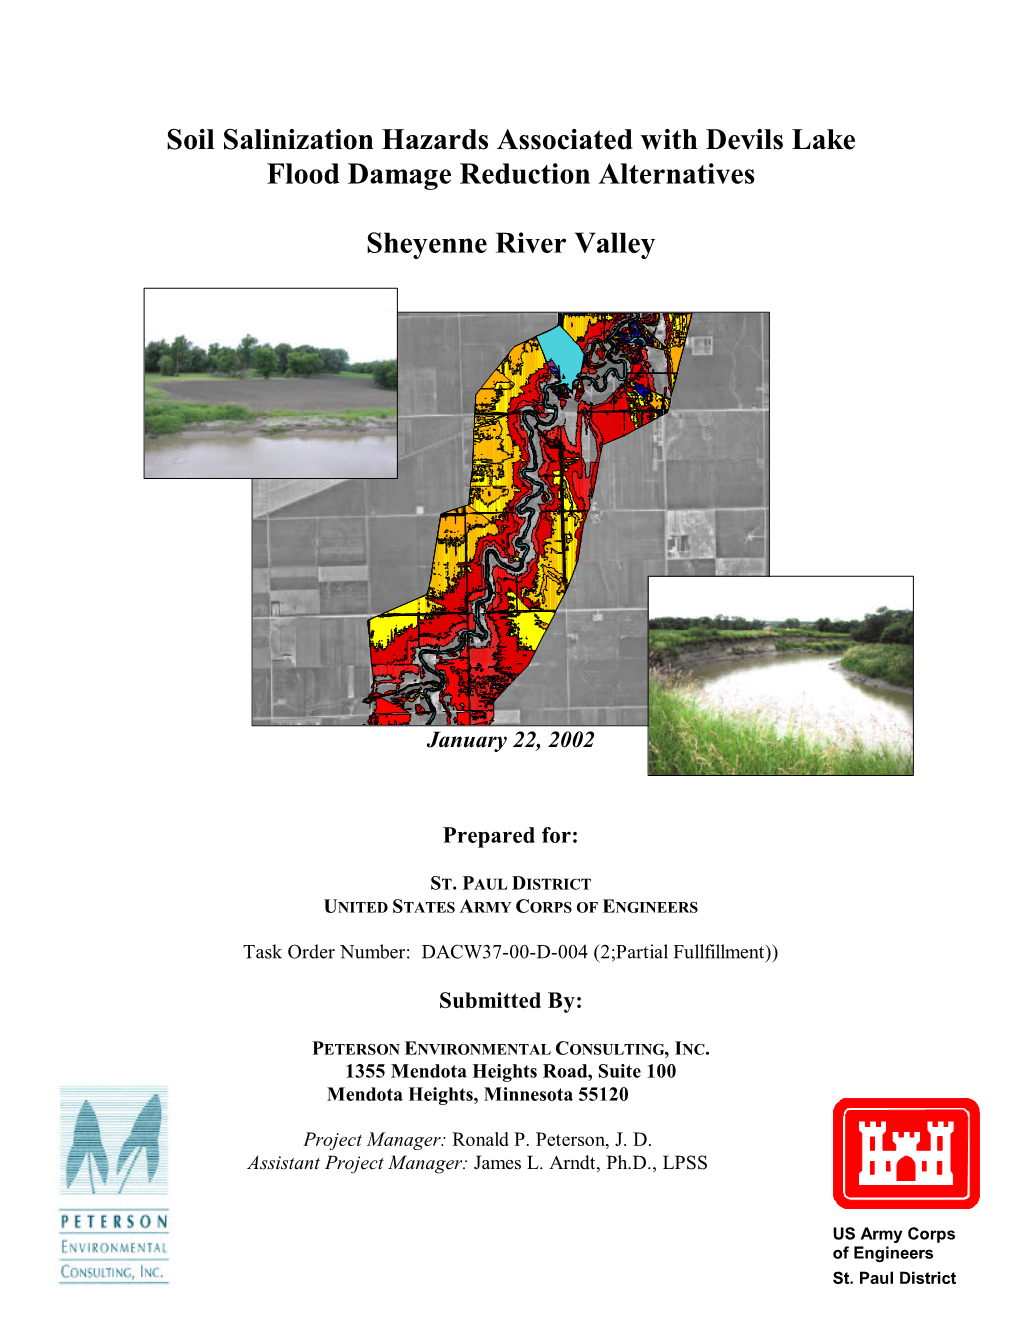 Soil Salinization Hazards Study Sheyenne River Valley